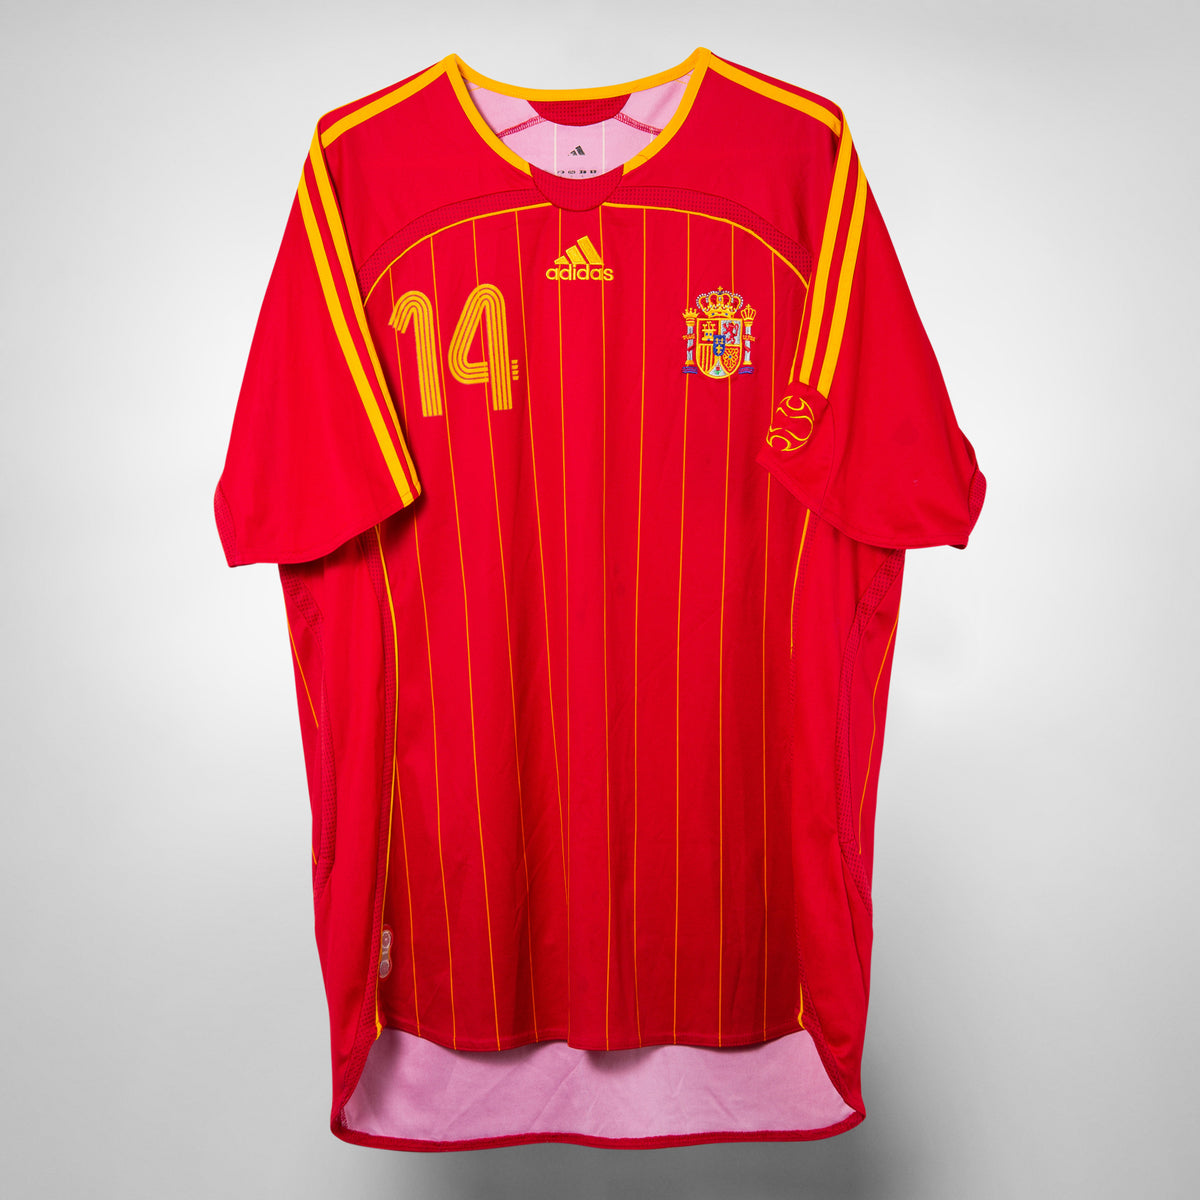 2005-2007 Spain Adidas Home Shirt #14 Xabi Alonso